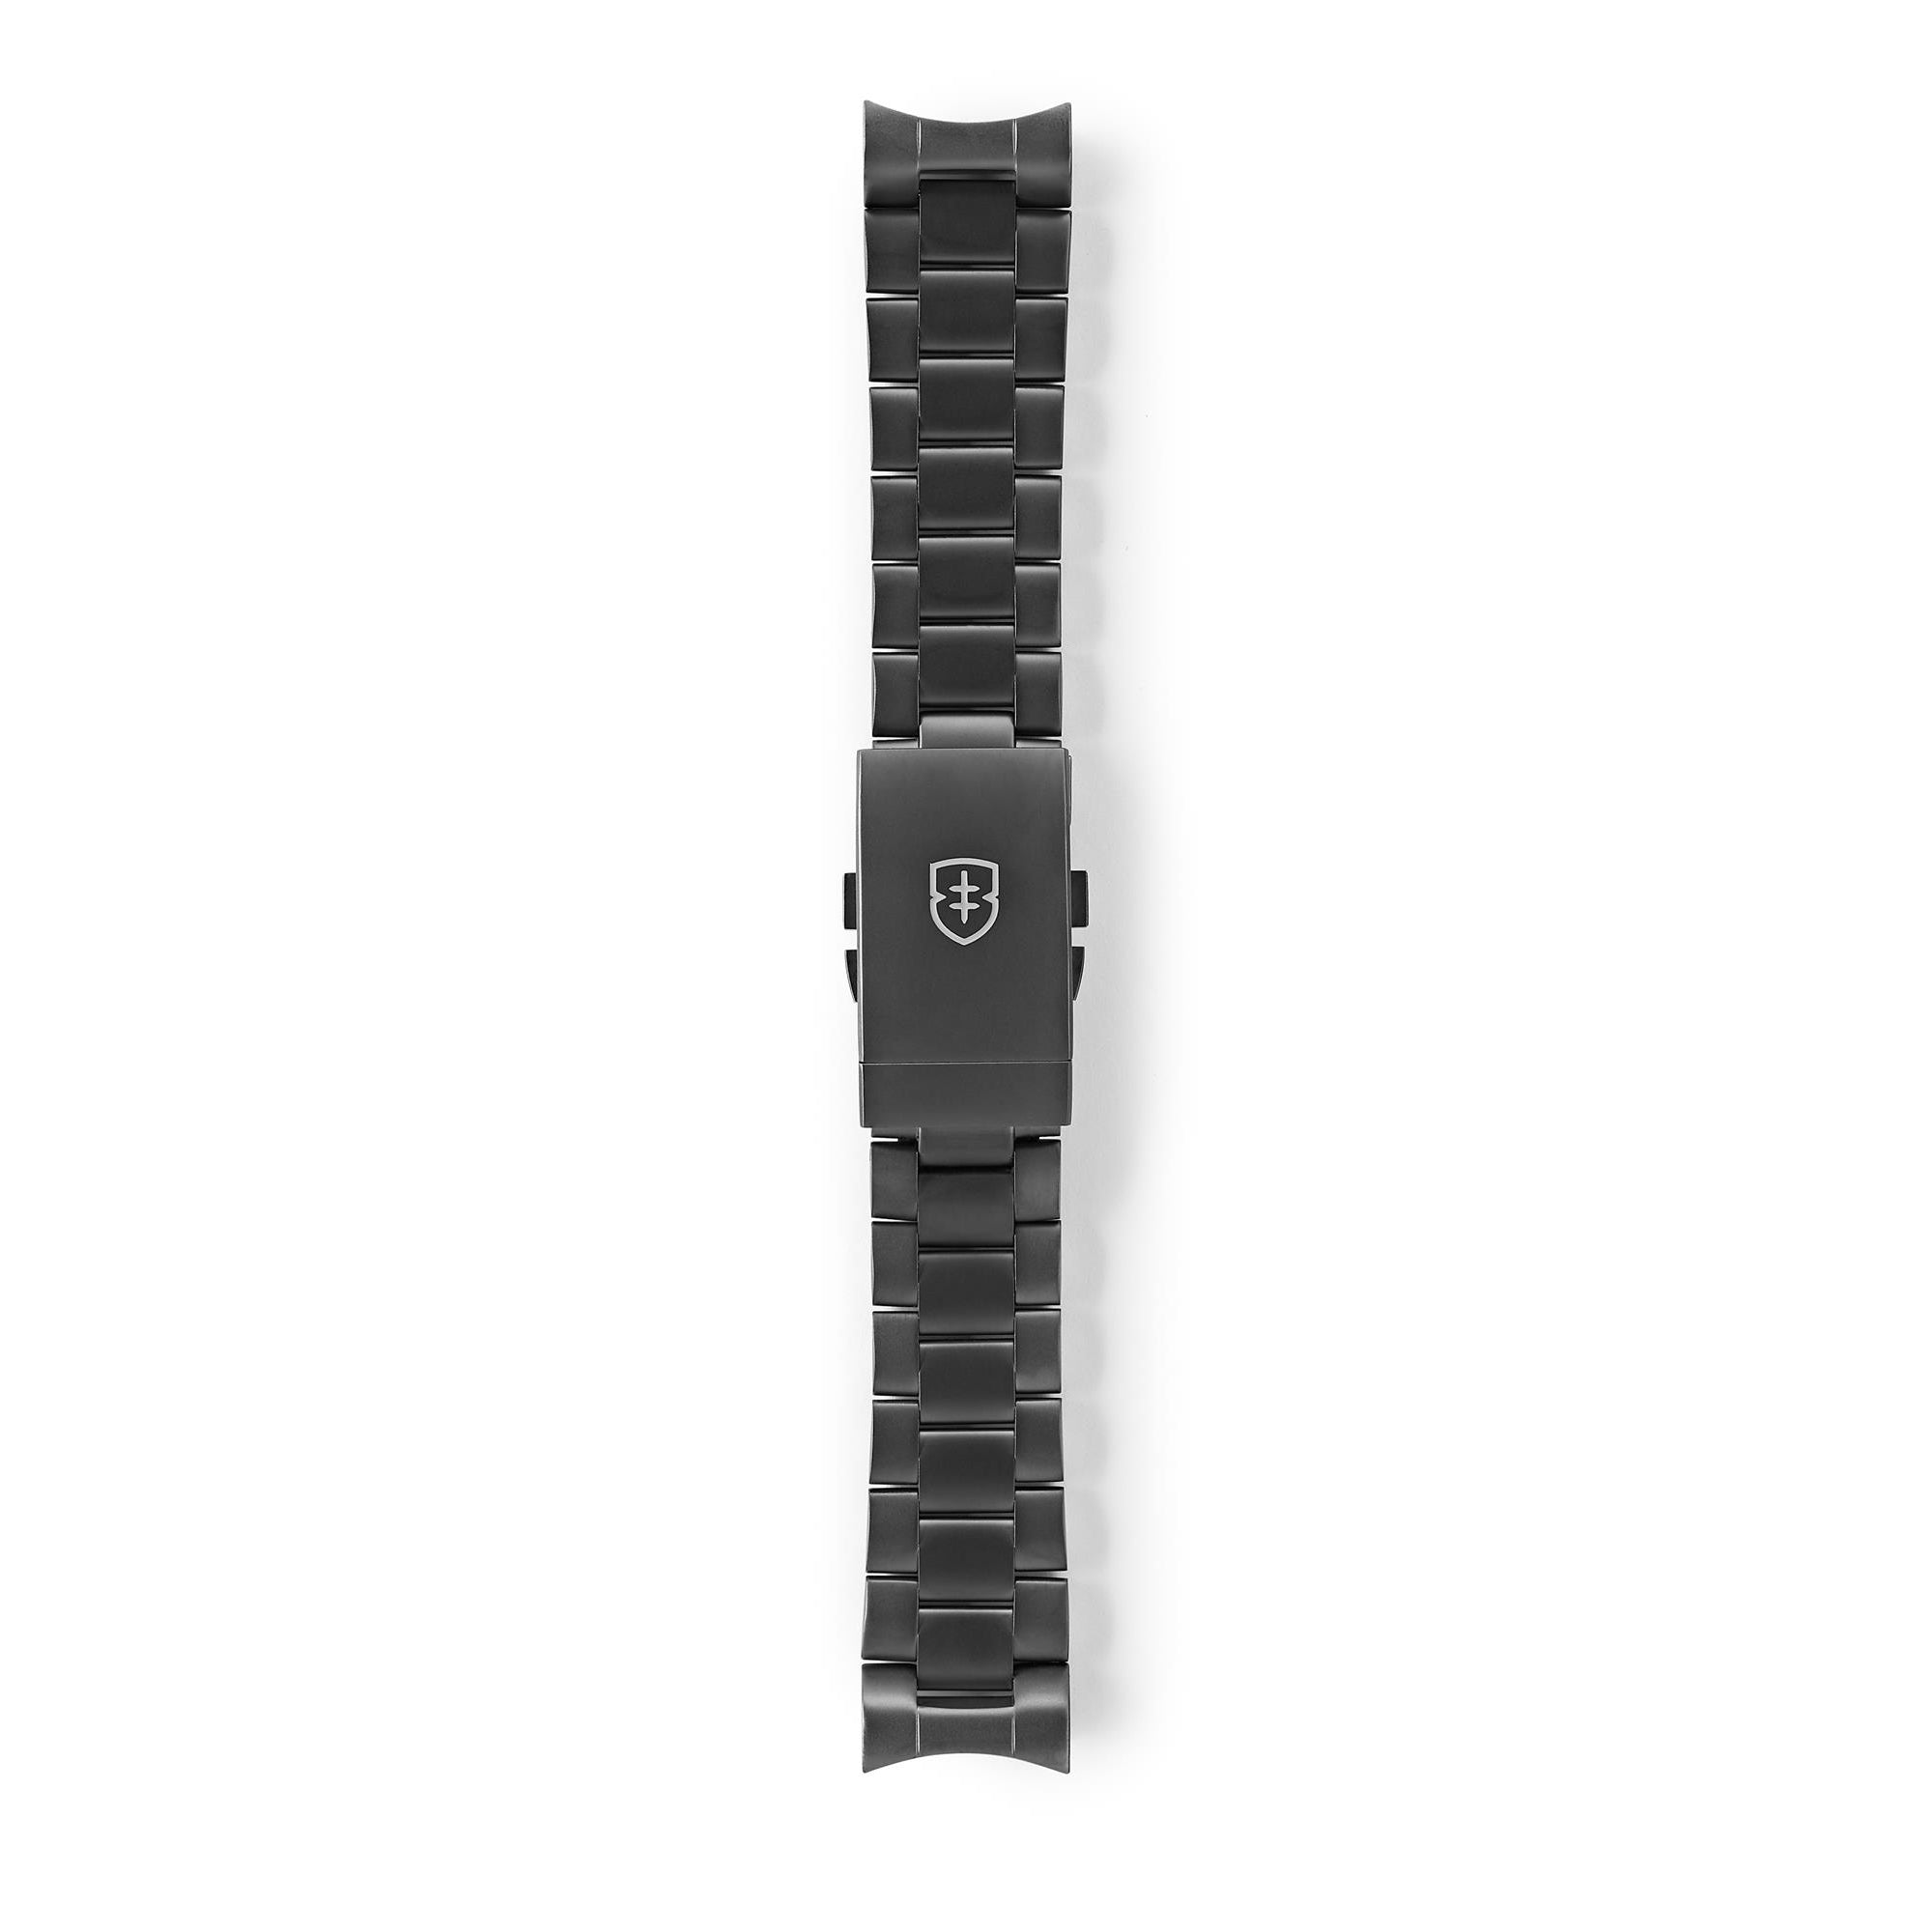 Elliot Brown STR-B09 Sandblasted Gunmetal Grey PVD Bracelet product